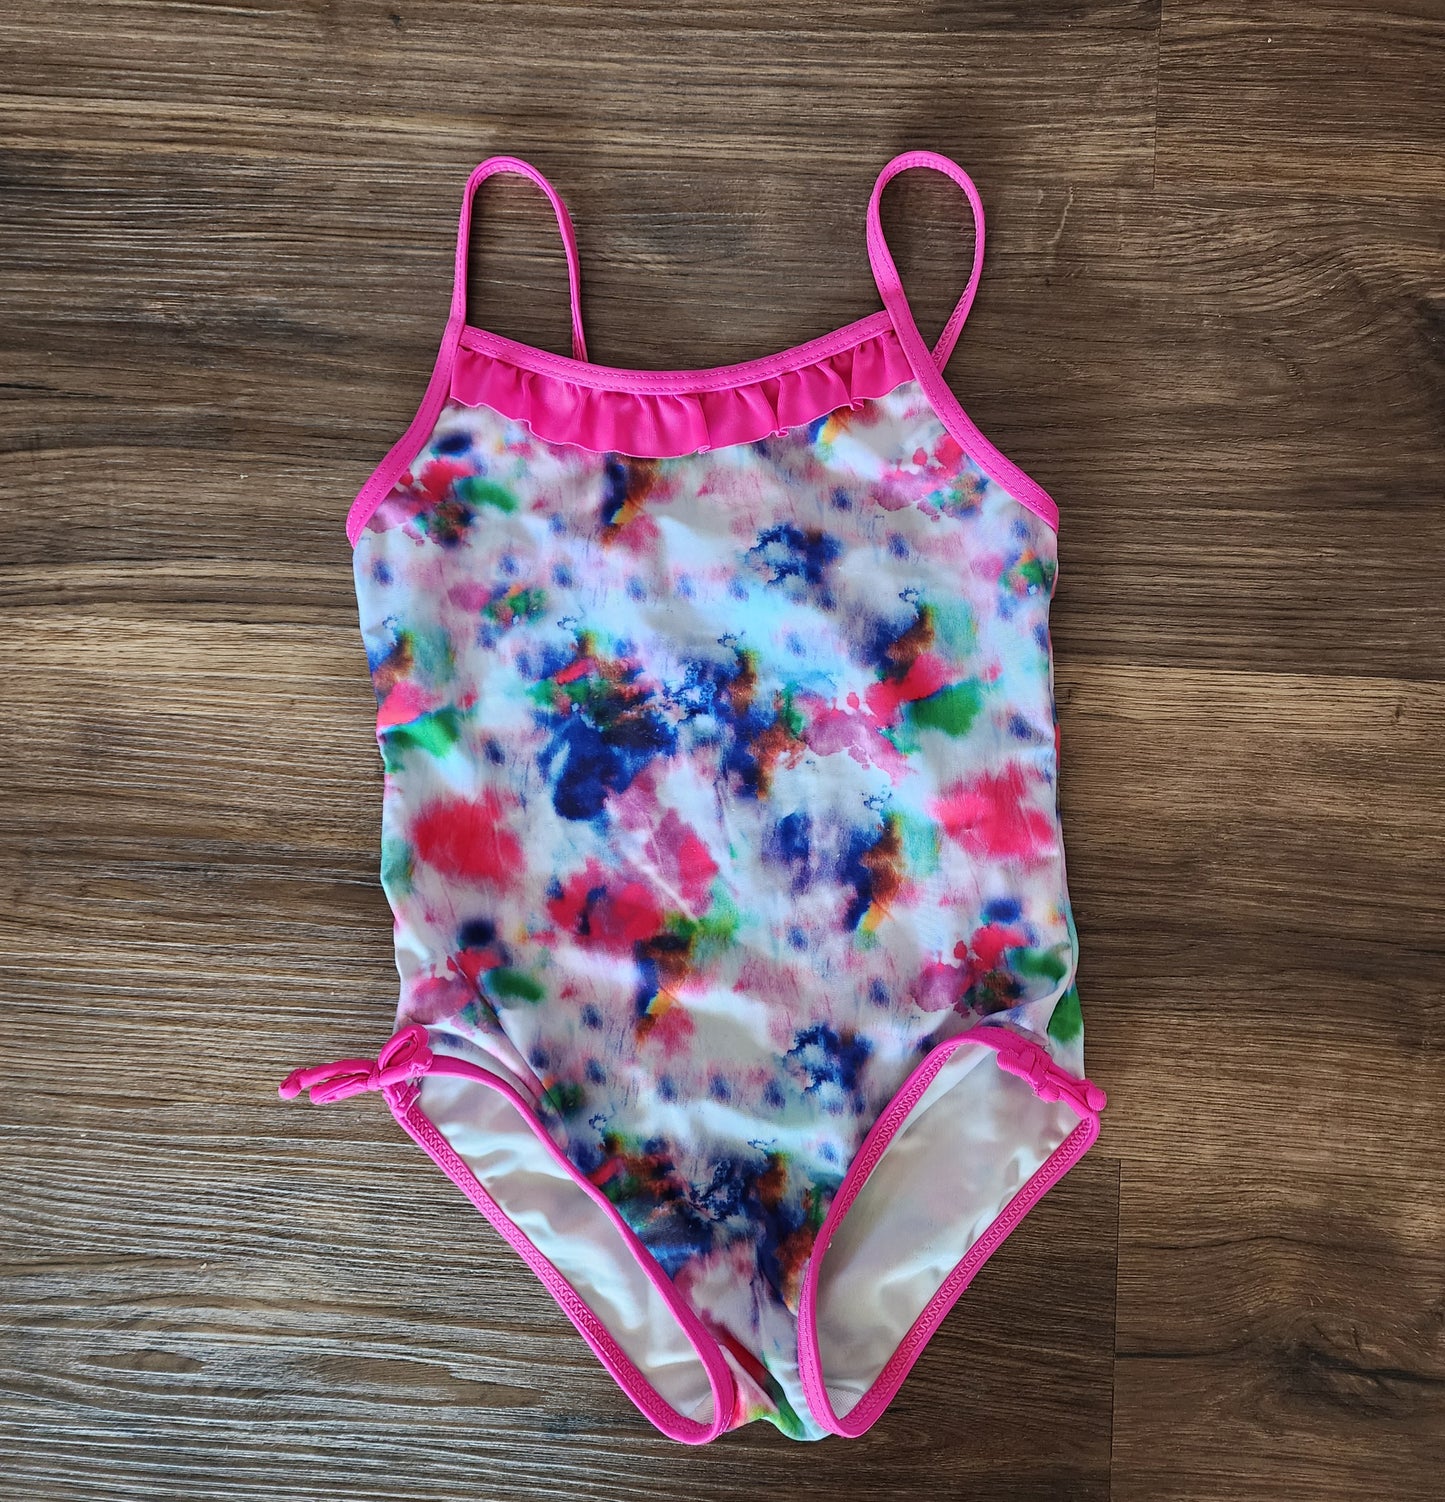 Girls bathing suit size 5-6